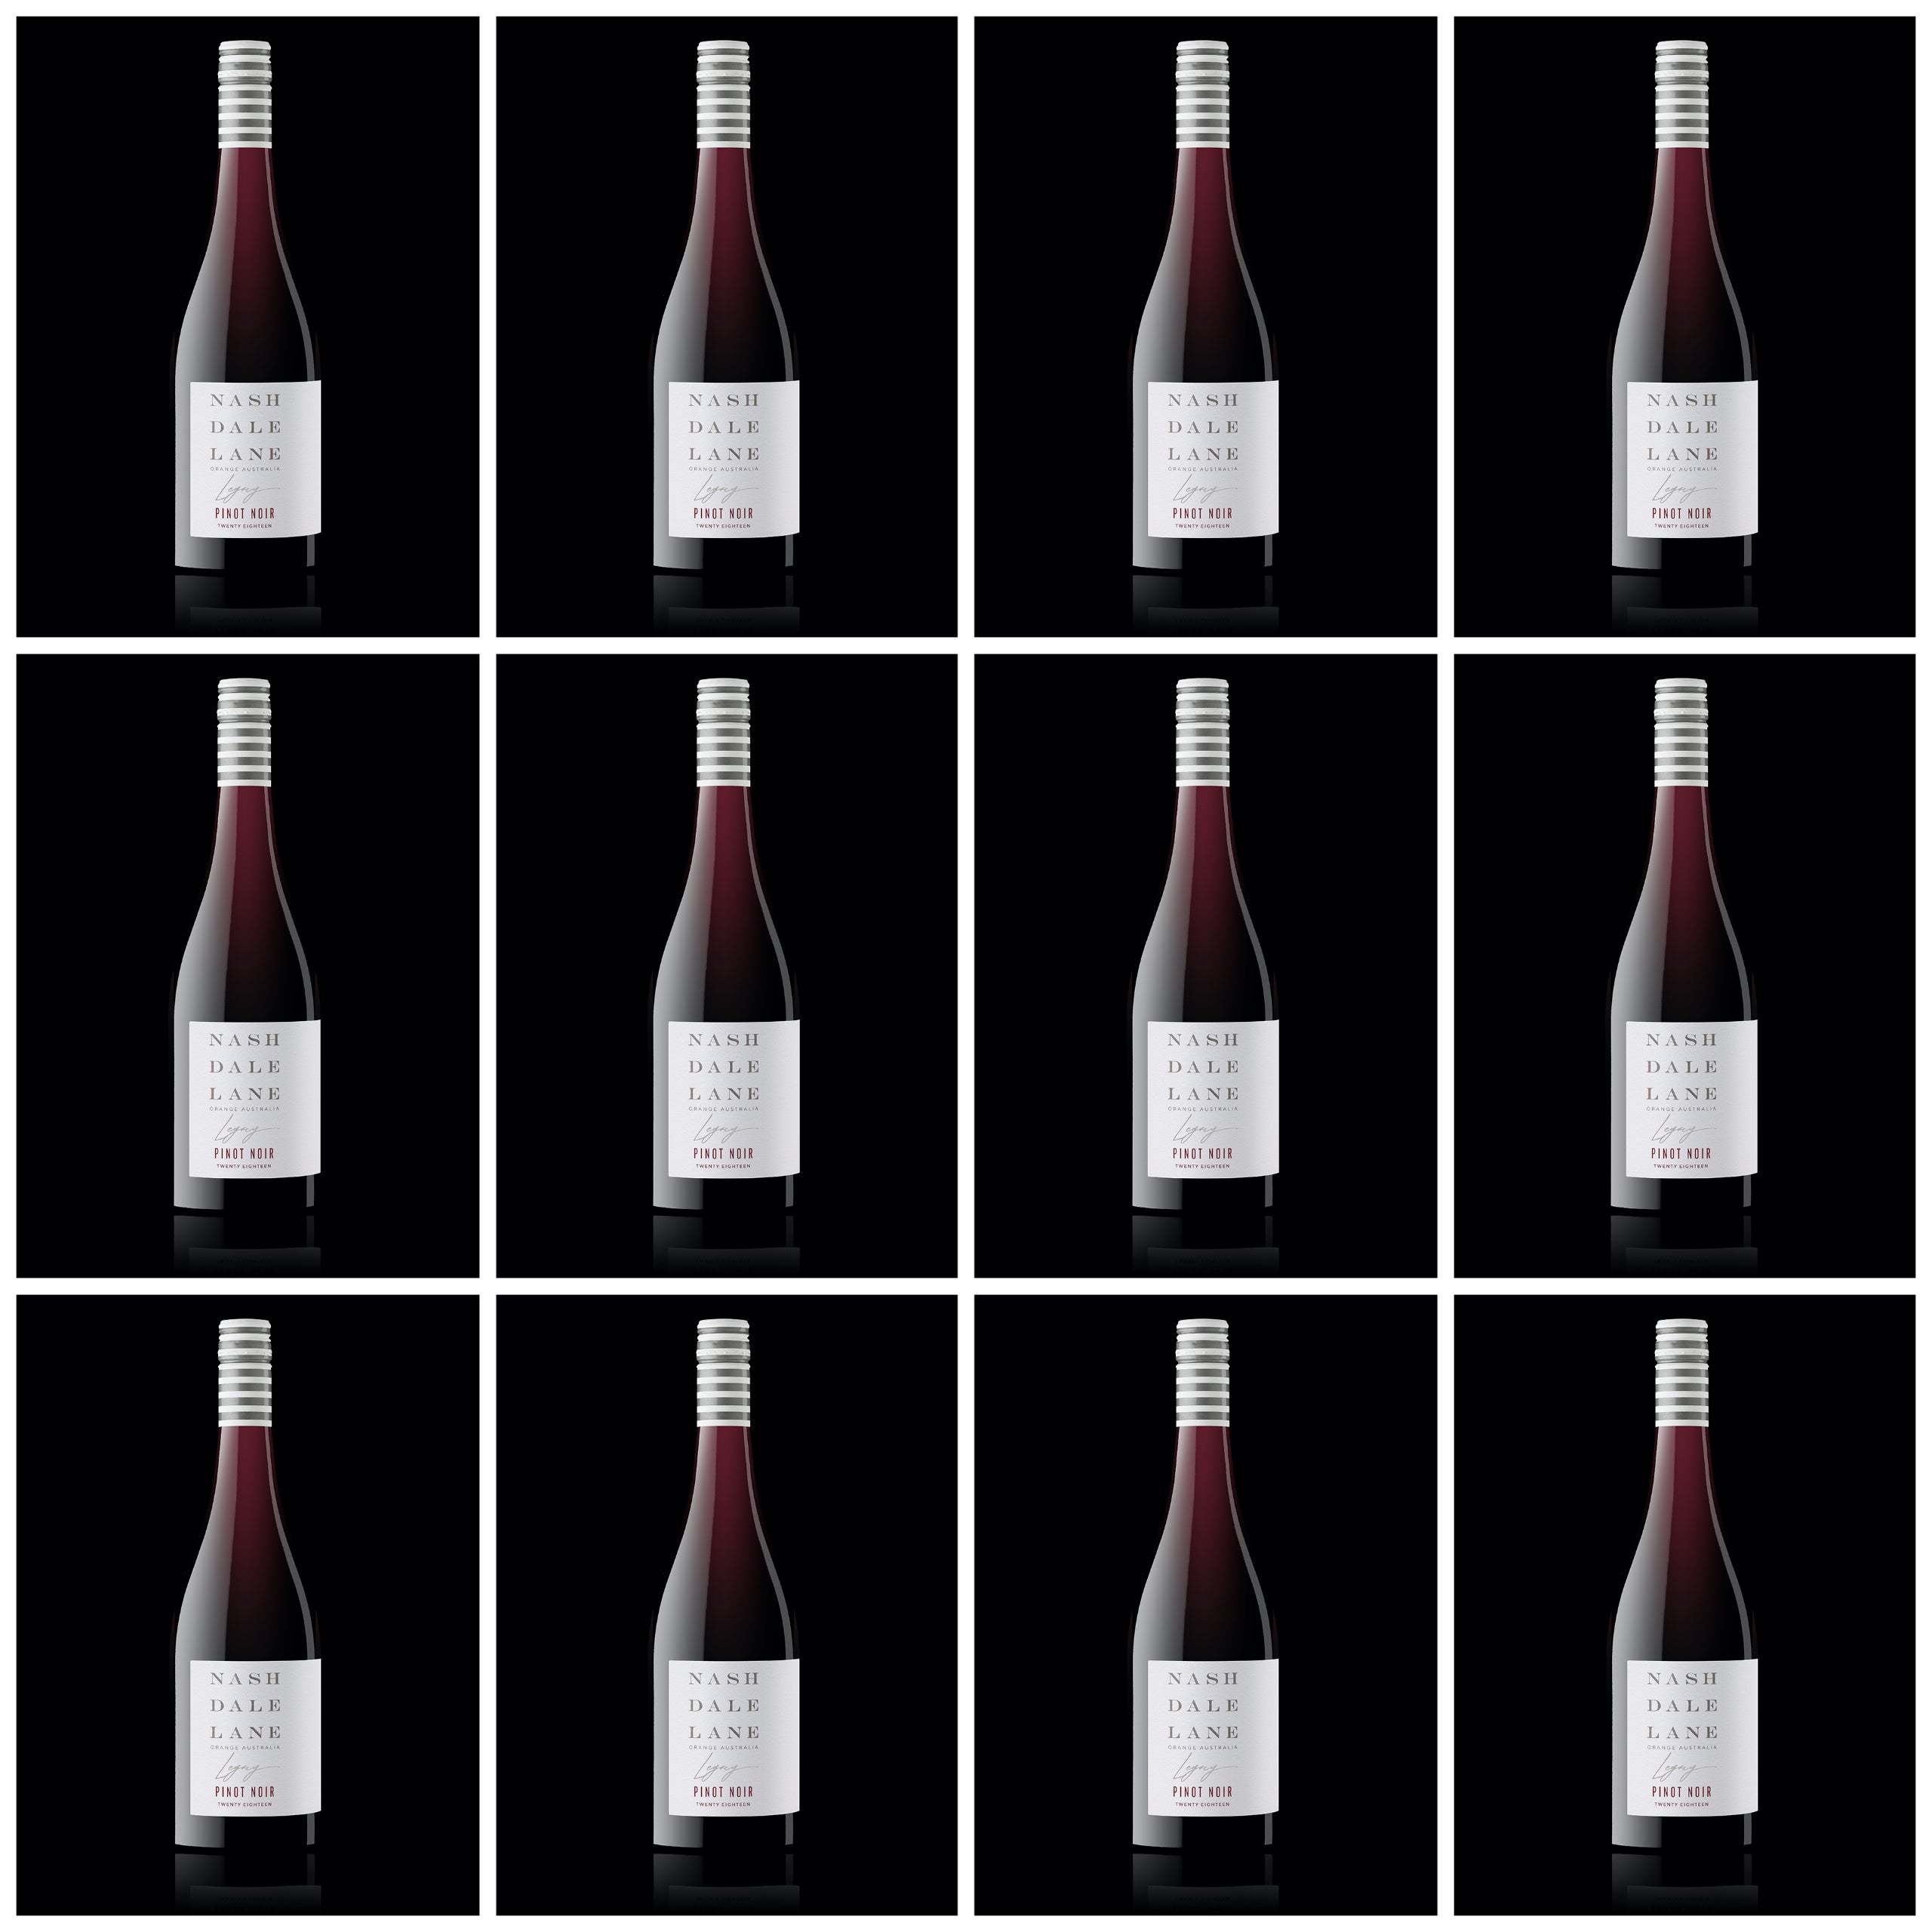 2018 Legacy Pinot Noir 12 bottle case